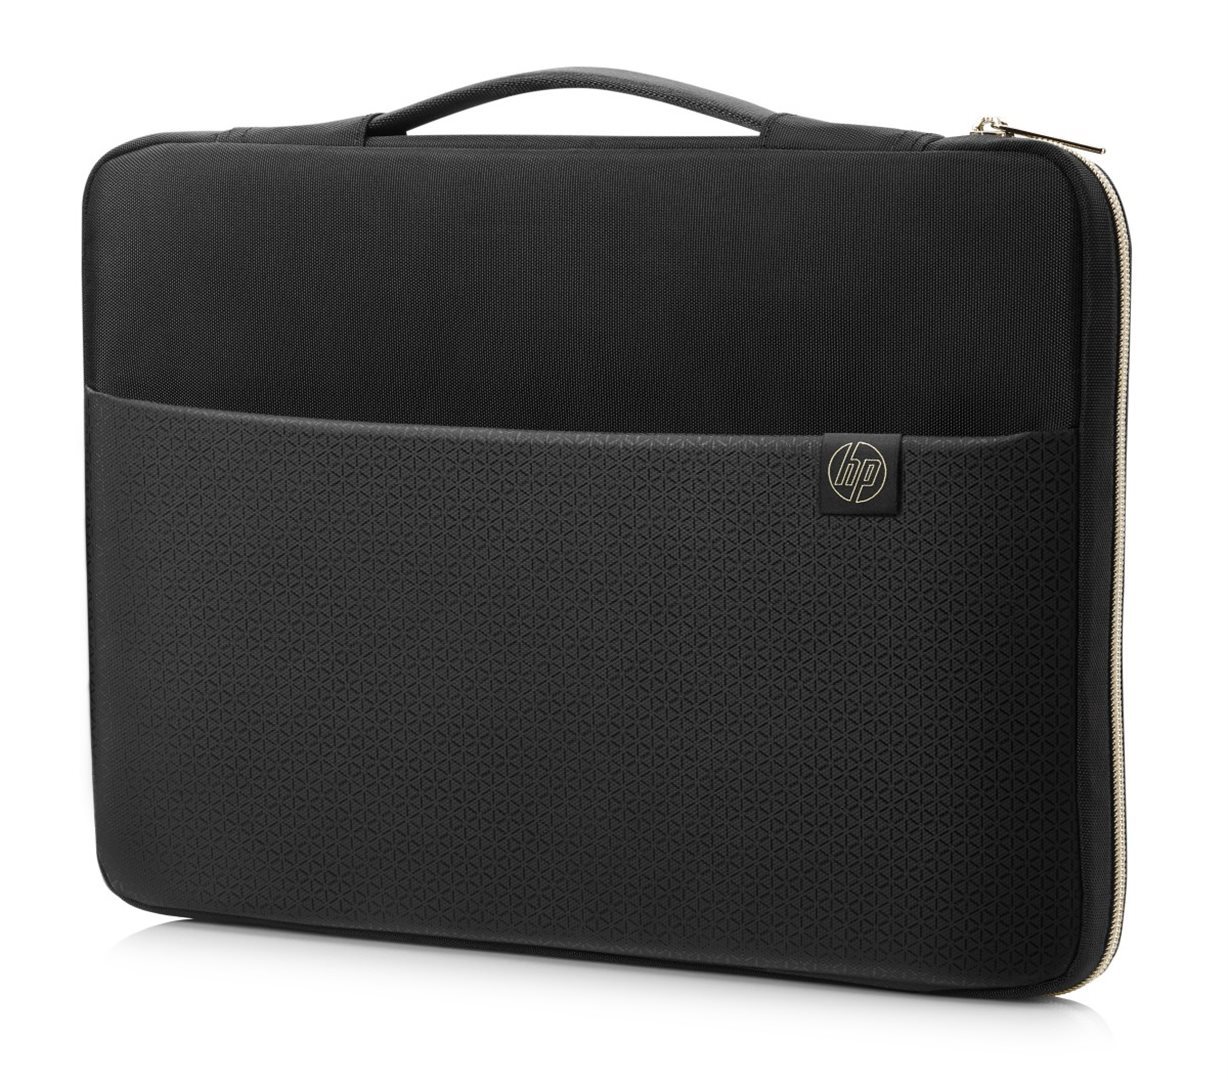 HP 15 Carry Sleeve Black/Gold - BAG